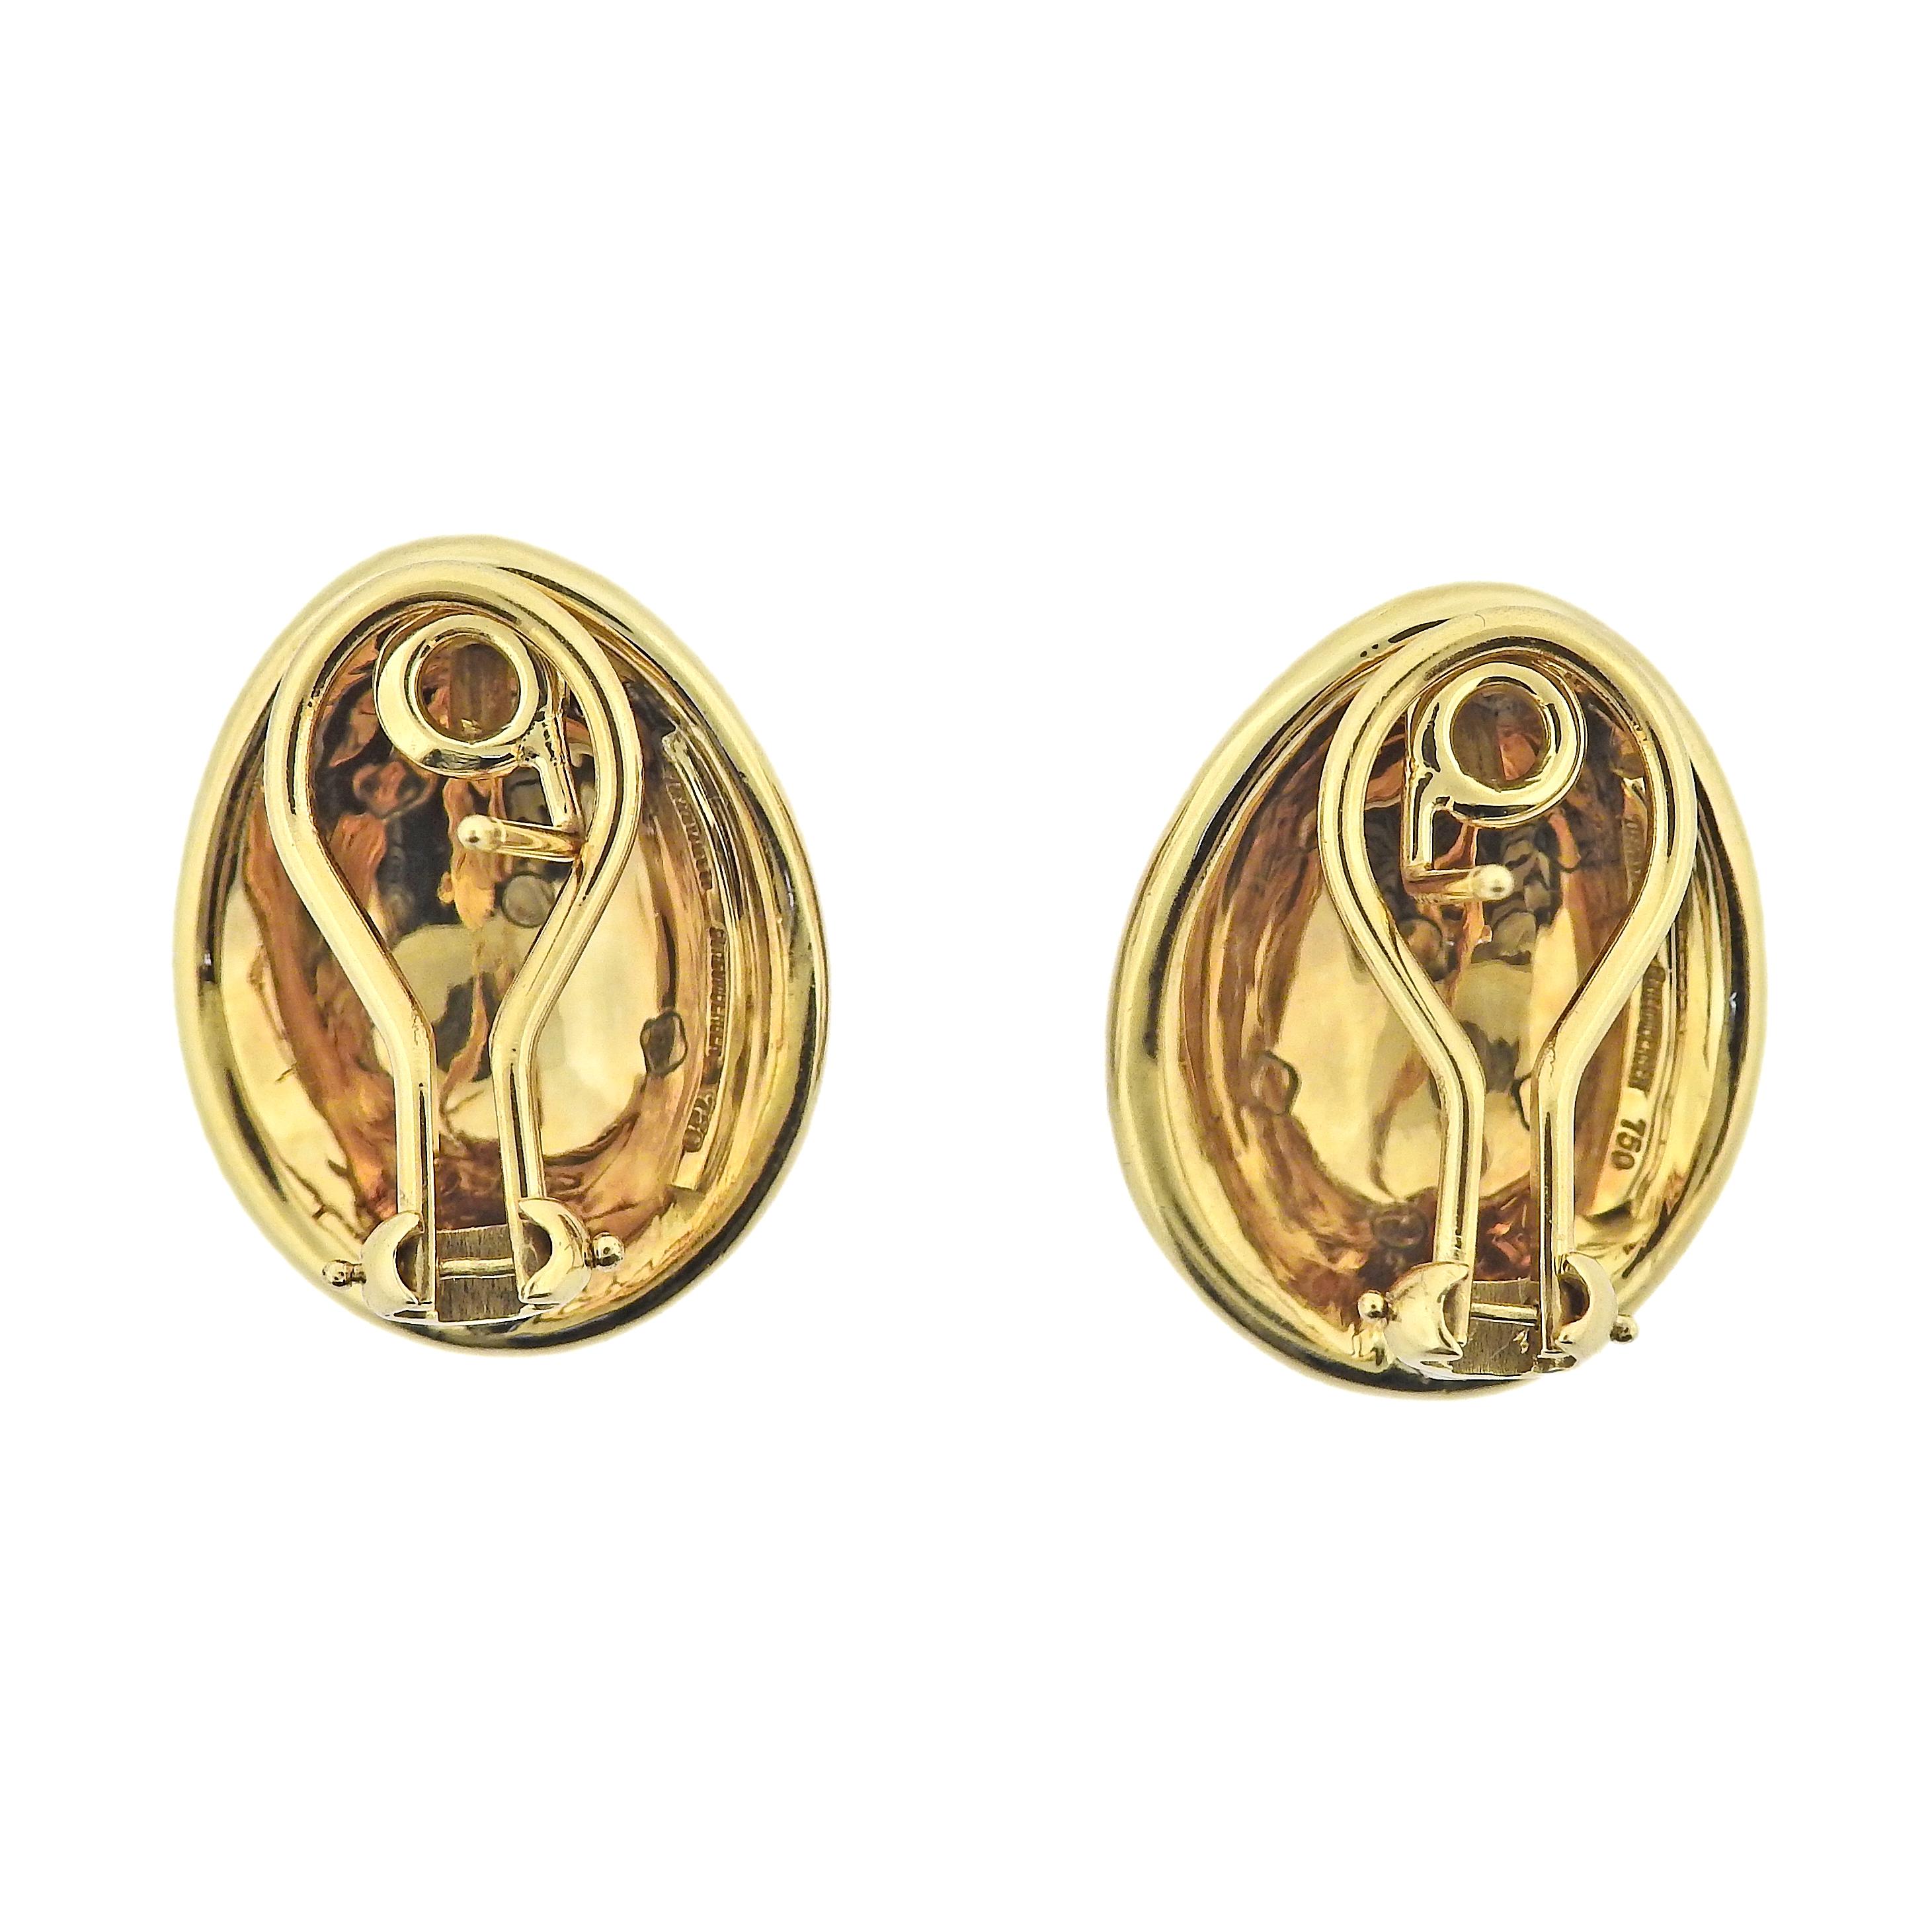 Pair of Tiffany & Co Schlumberger red enamel earrings in 18k gold.  Earrings are 23mm x 18mm. Weight - 20.1 grams. Marked: Schlumberger, Tiffany & Co, 750.